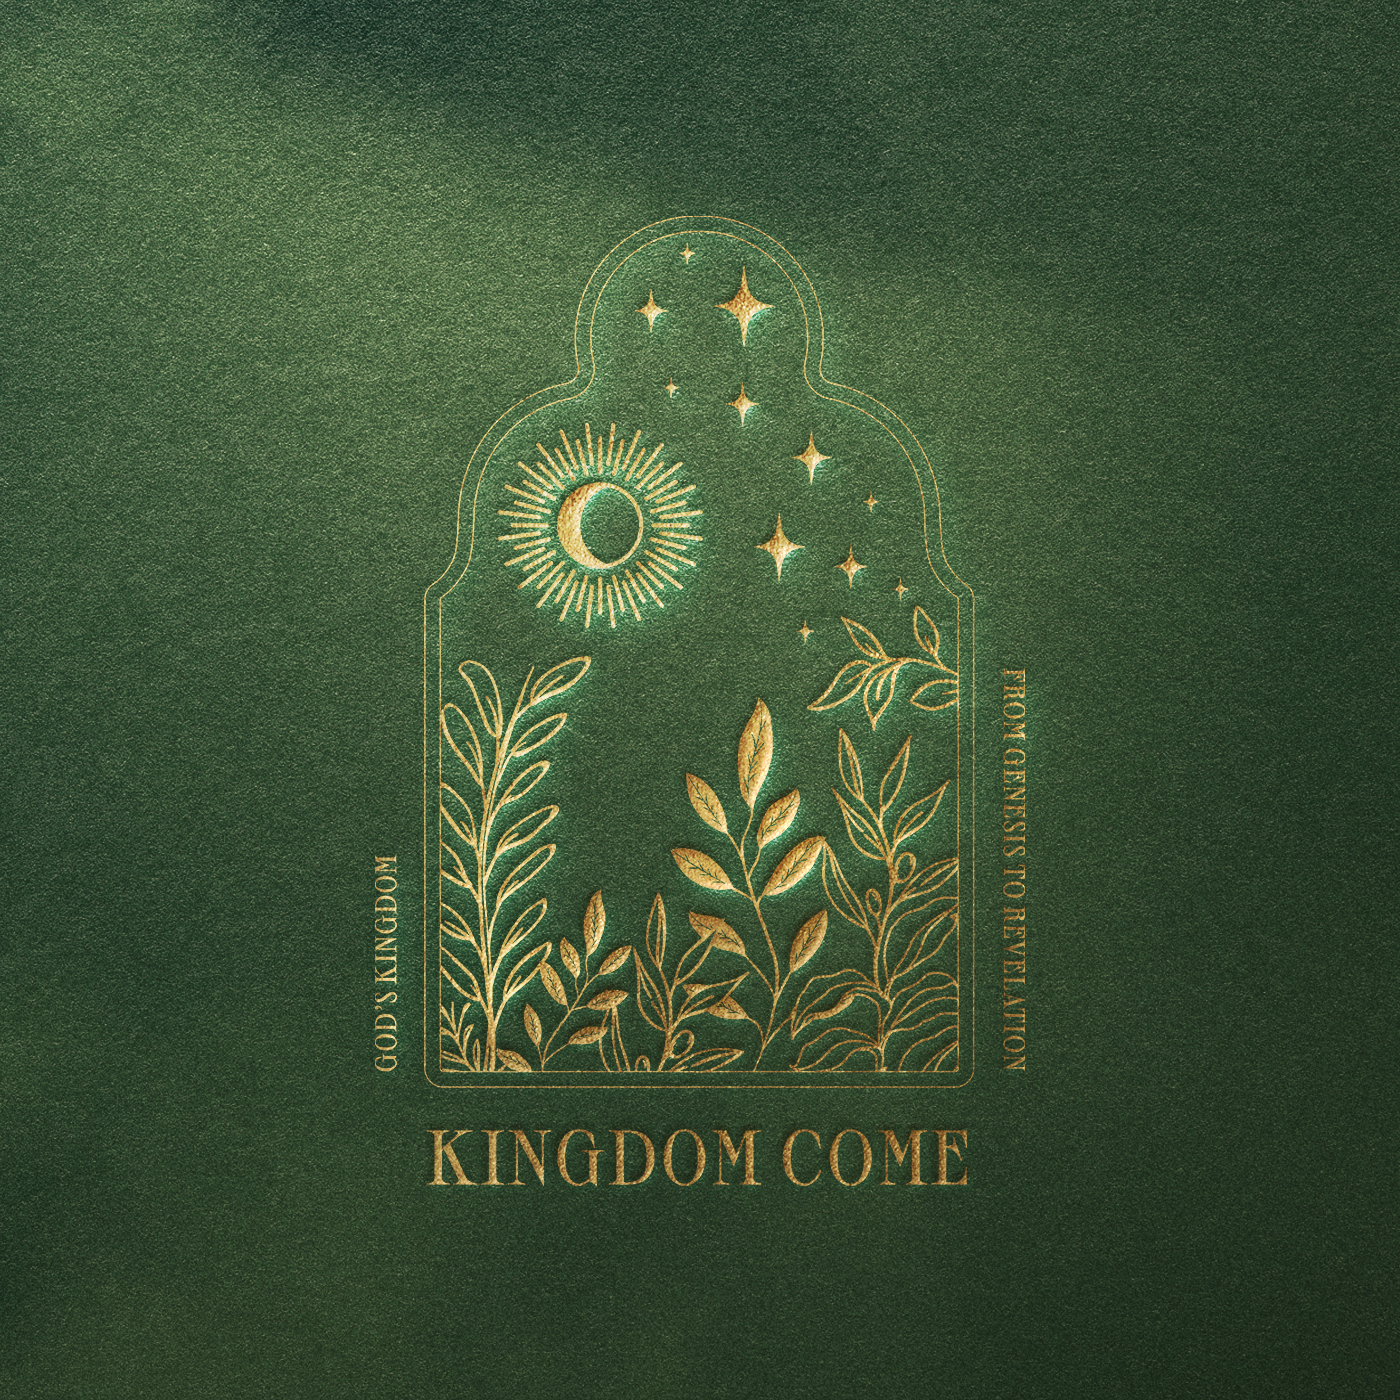 Kingdom Come | Genesis 11:1-9